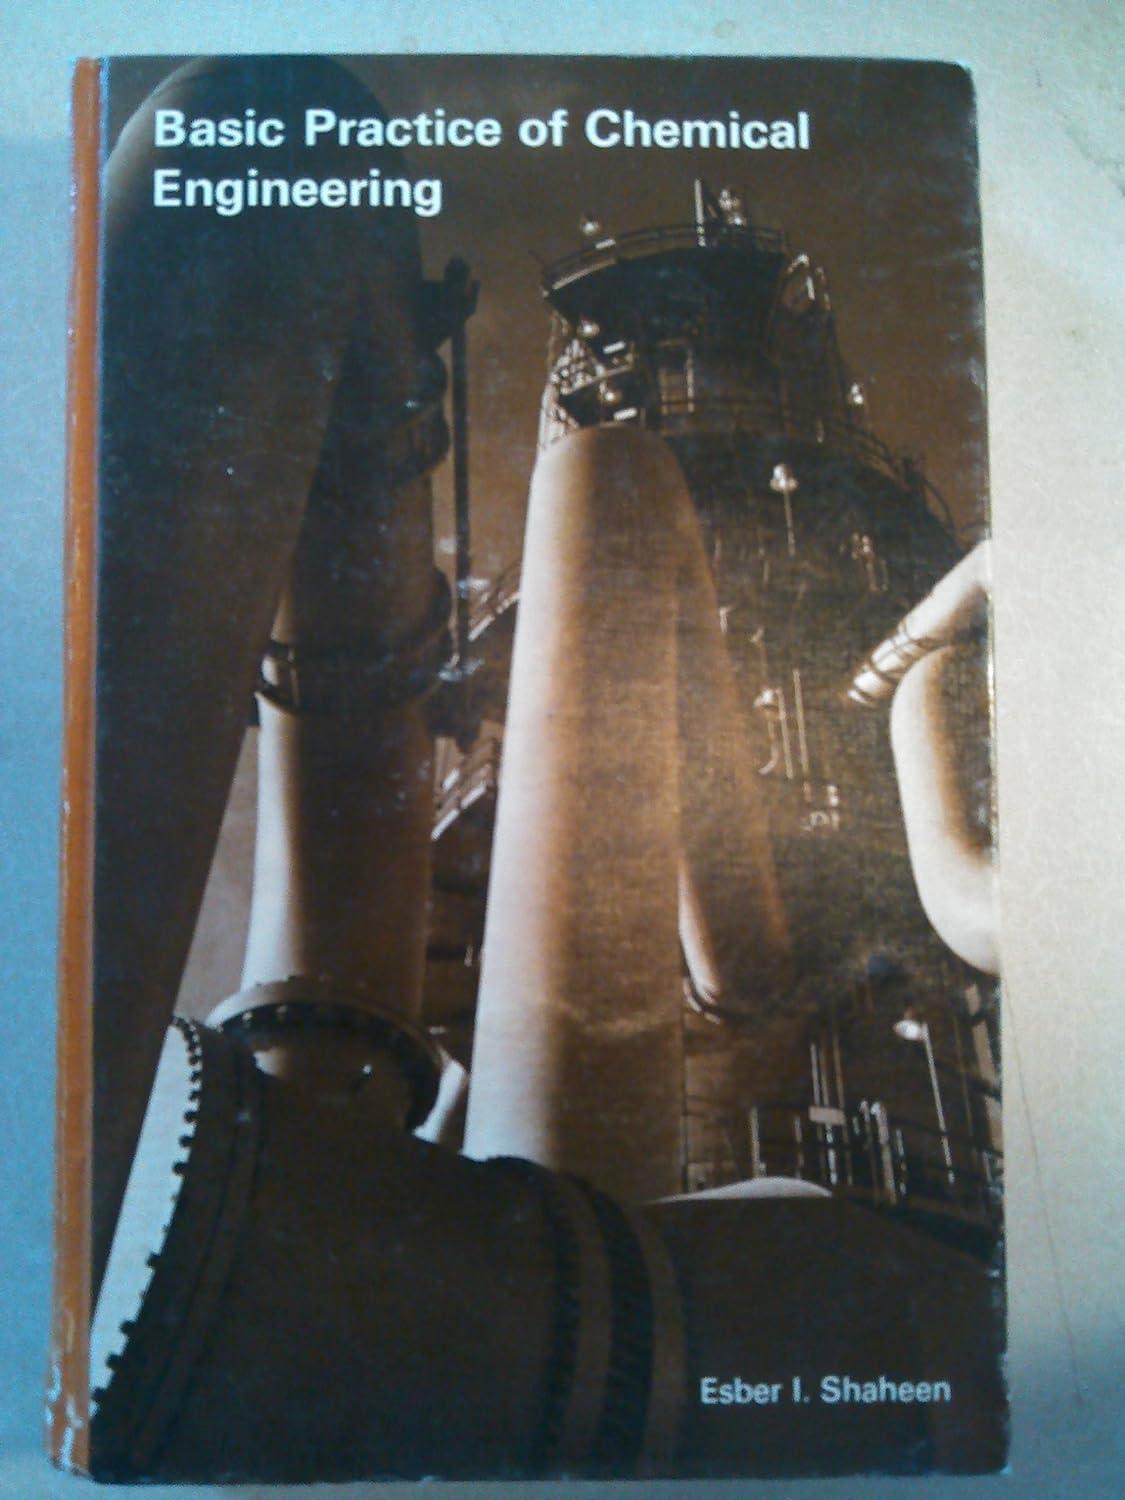 basic practice of chemical engineering 2nd edition esbar i. shaheen, esber i. shaheen 039517645x,